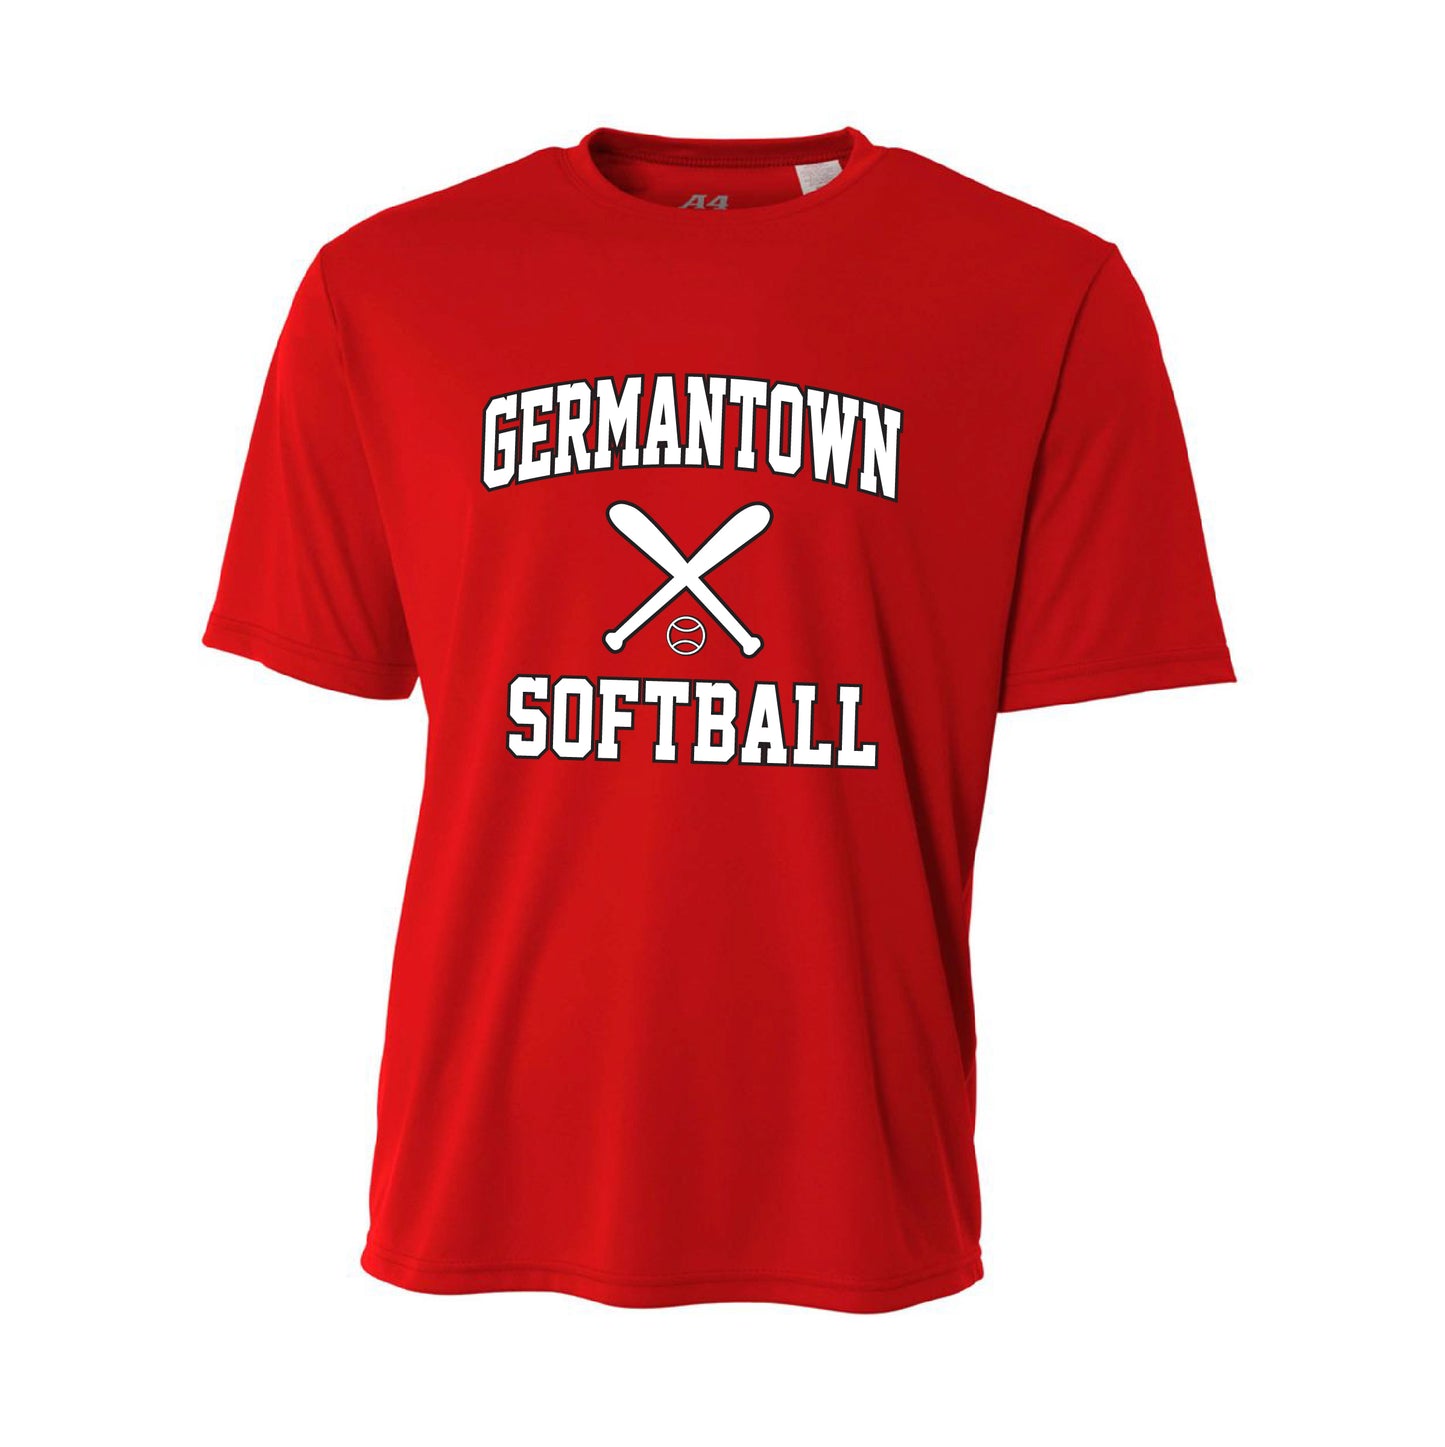 Germantown Softball - Red Jersey - 12879 8U